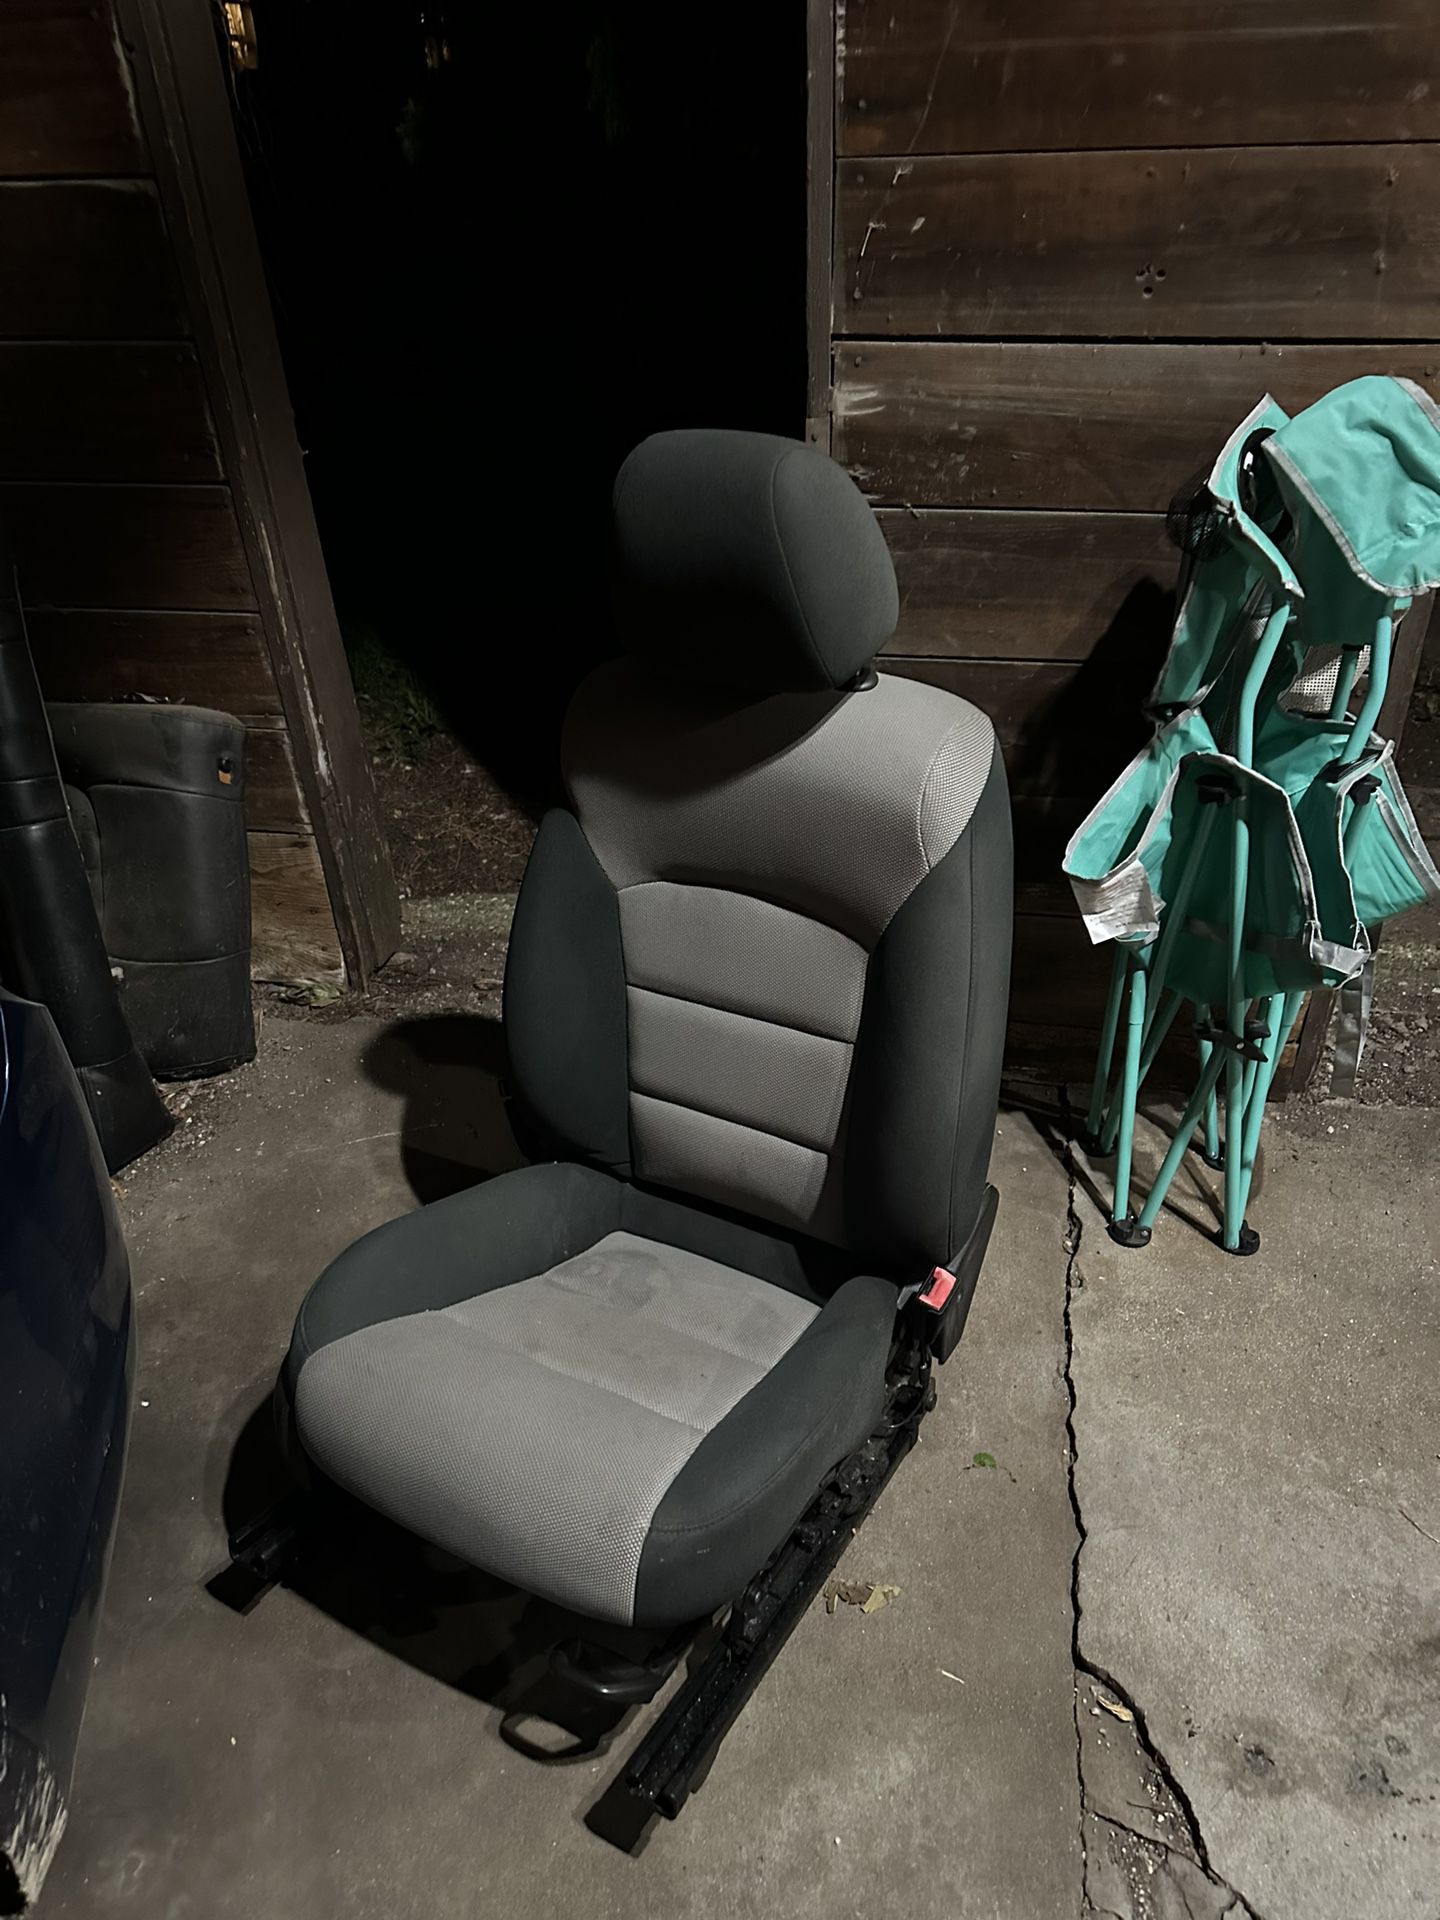 2009-2015 Chevy Cruze Passenger Seat (manual) 